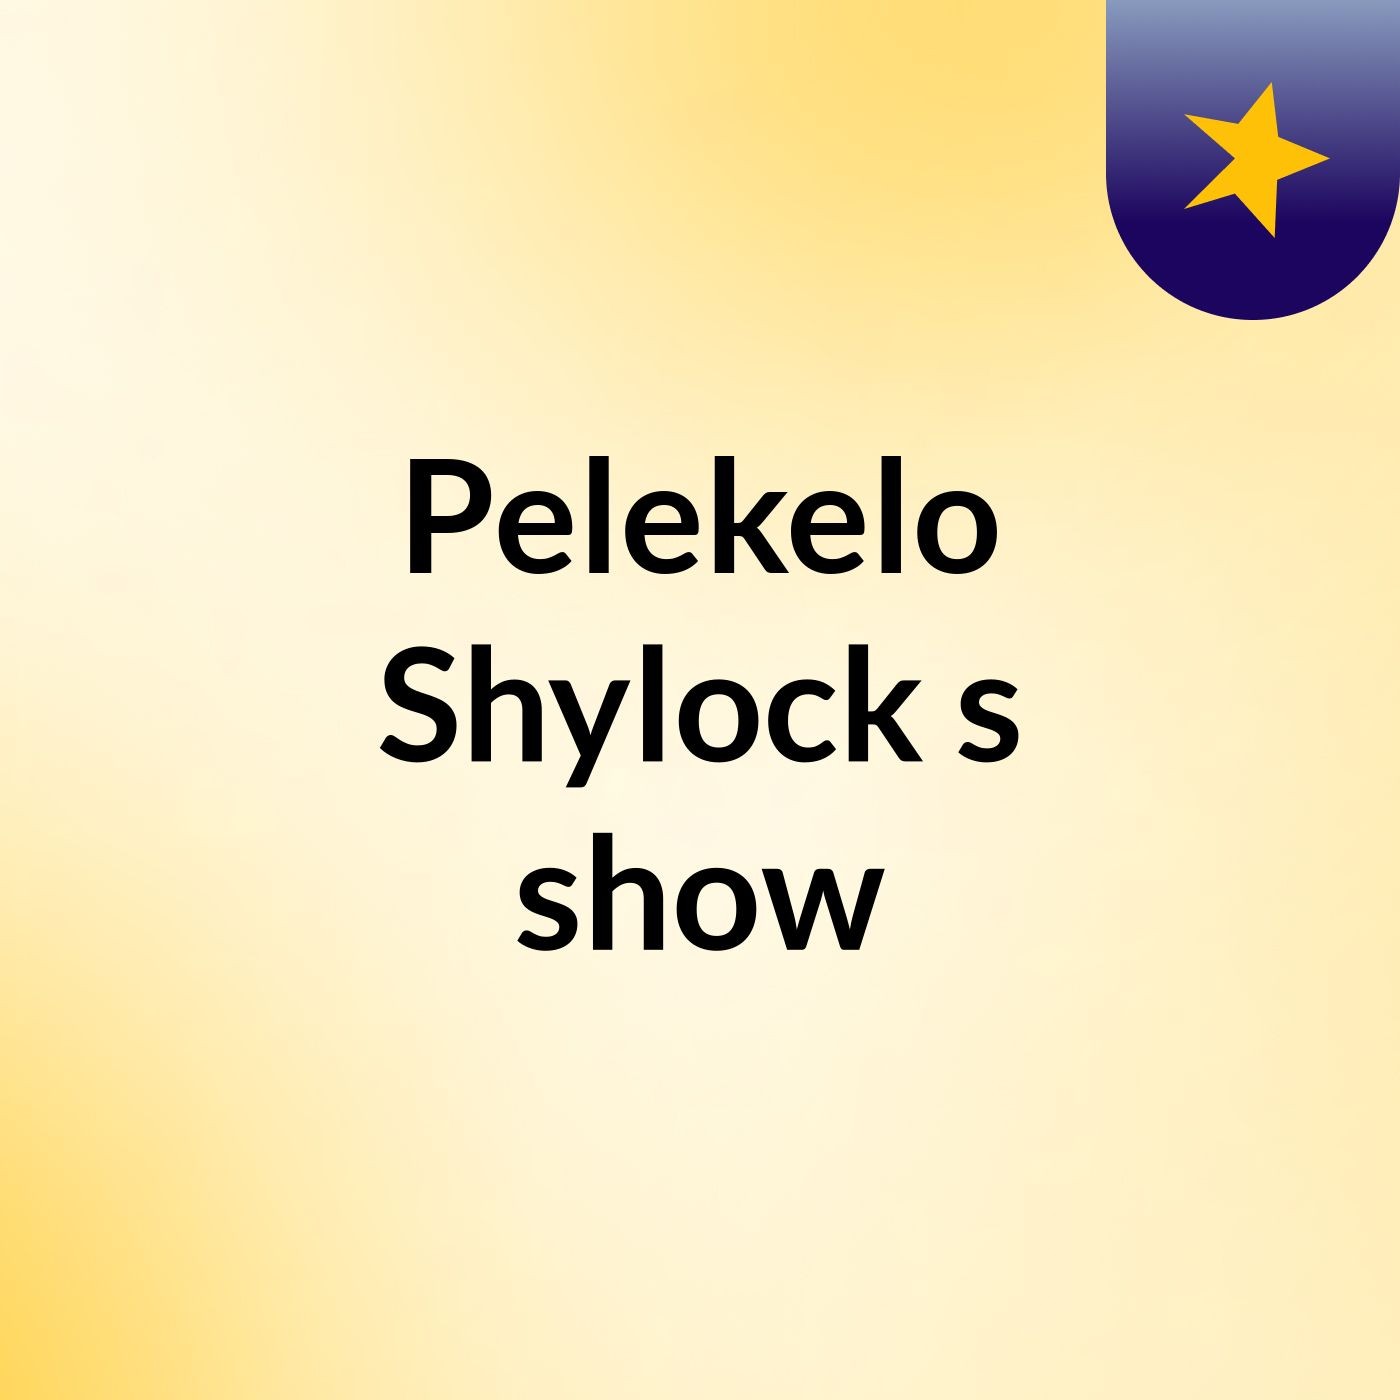 Pelekelo Shylock's show